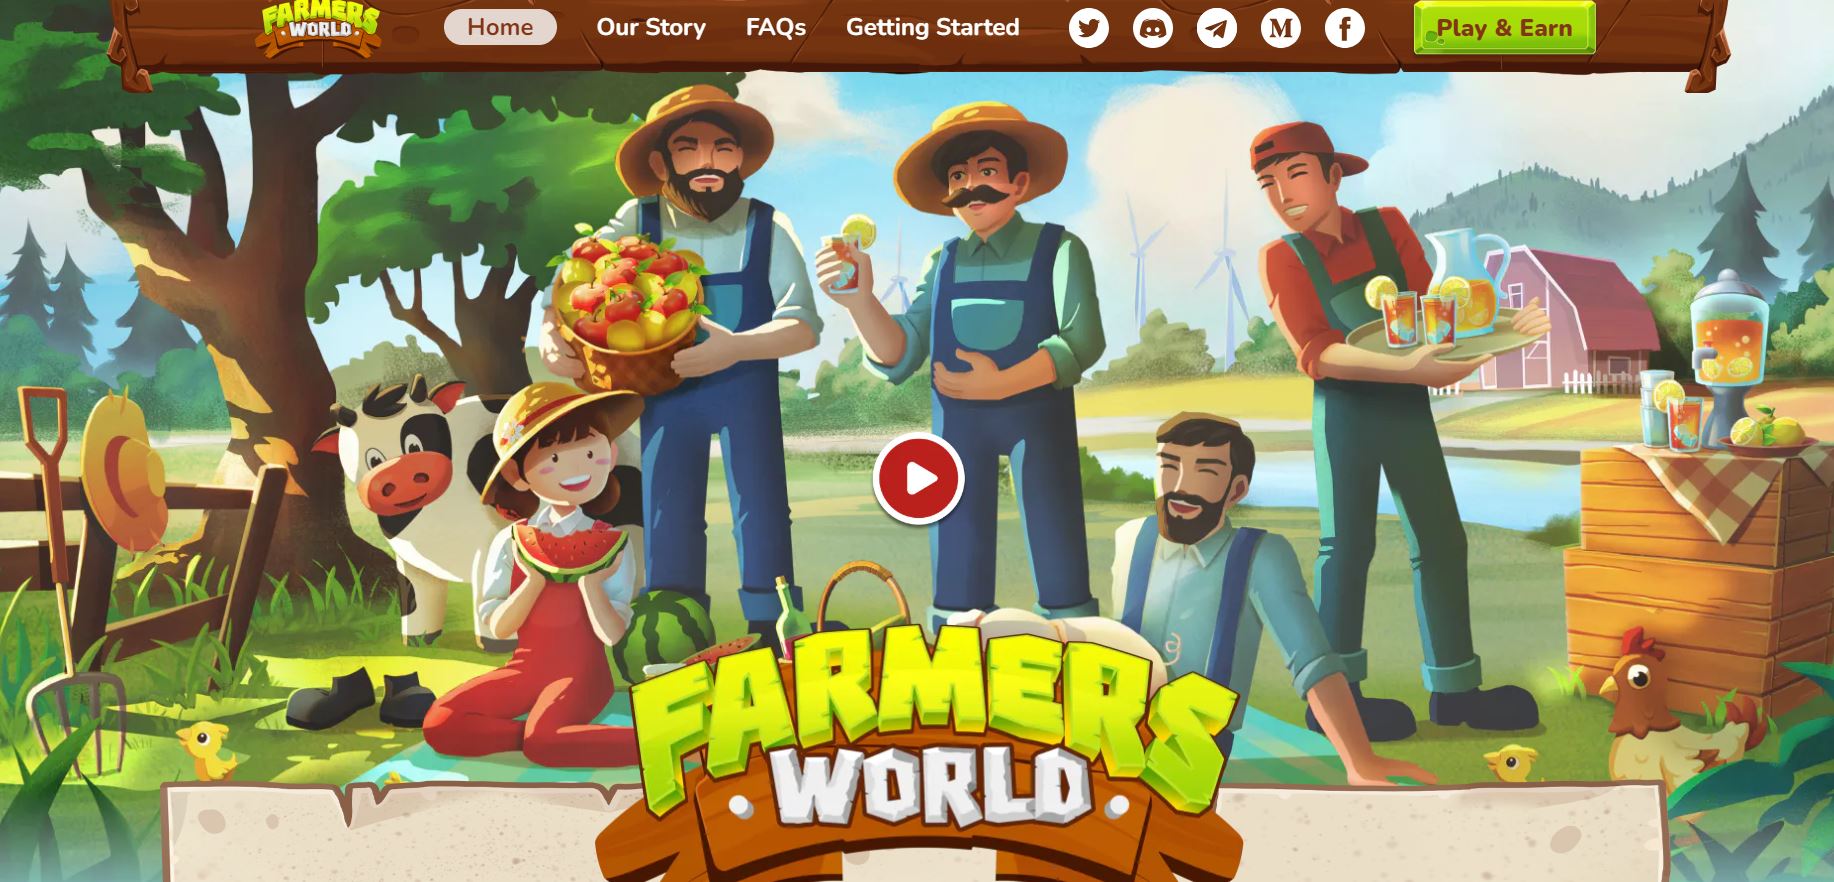 Farmers World recenze